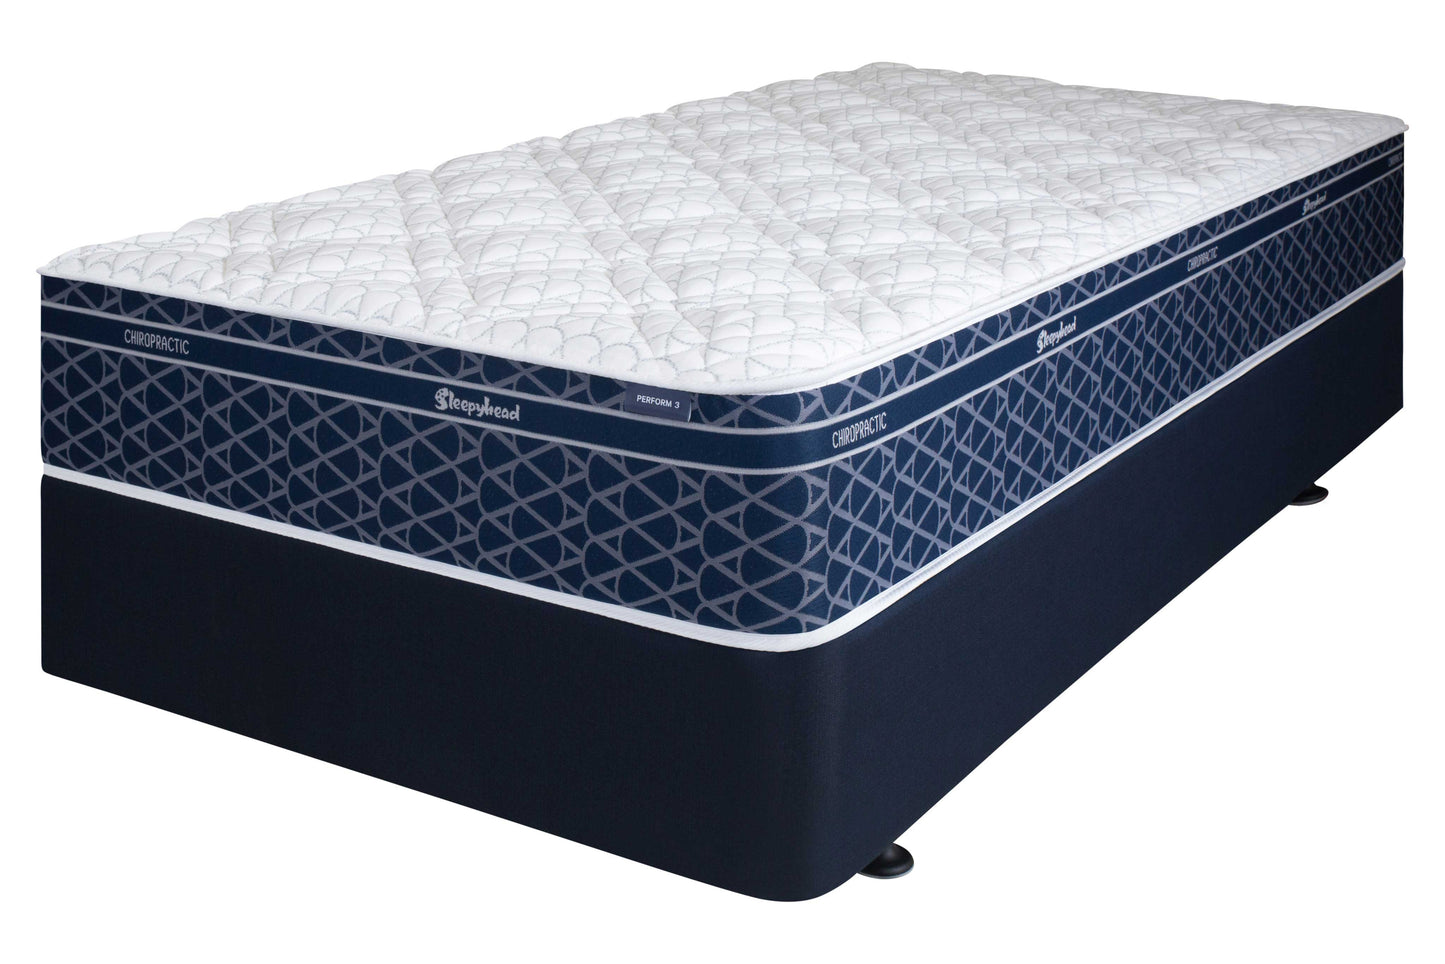 perform-3-long-single-mattress-2